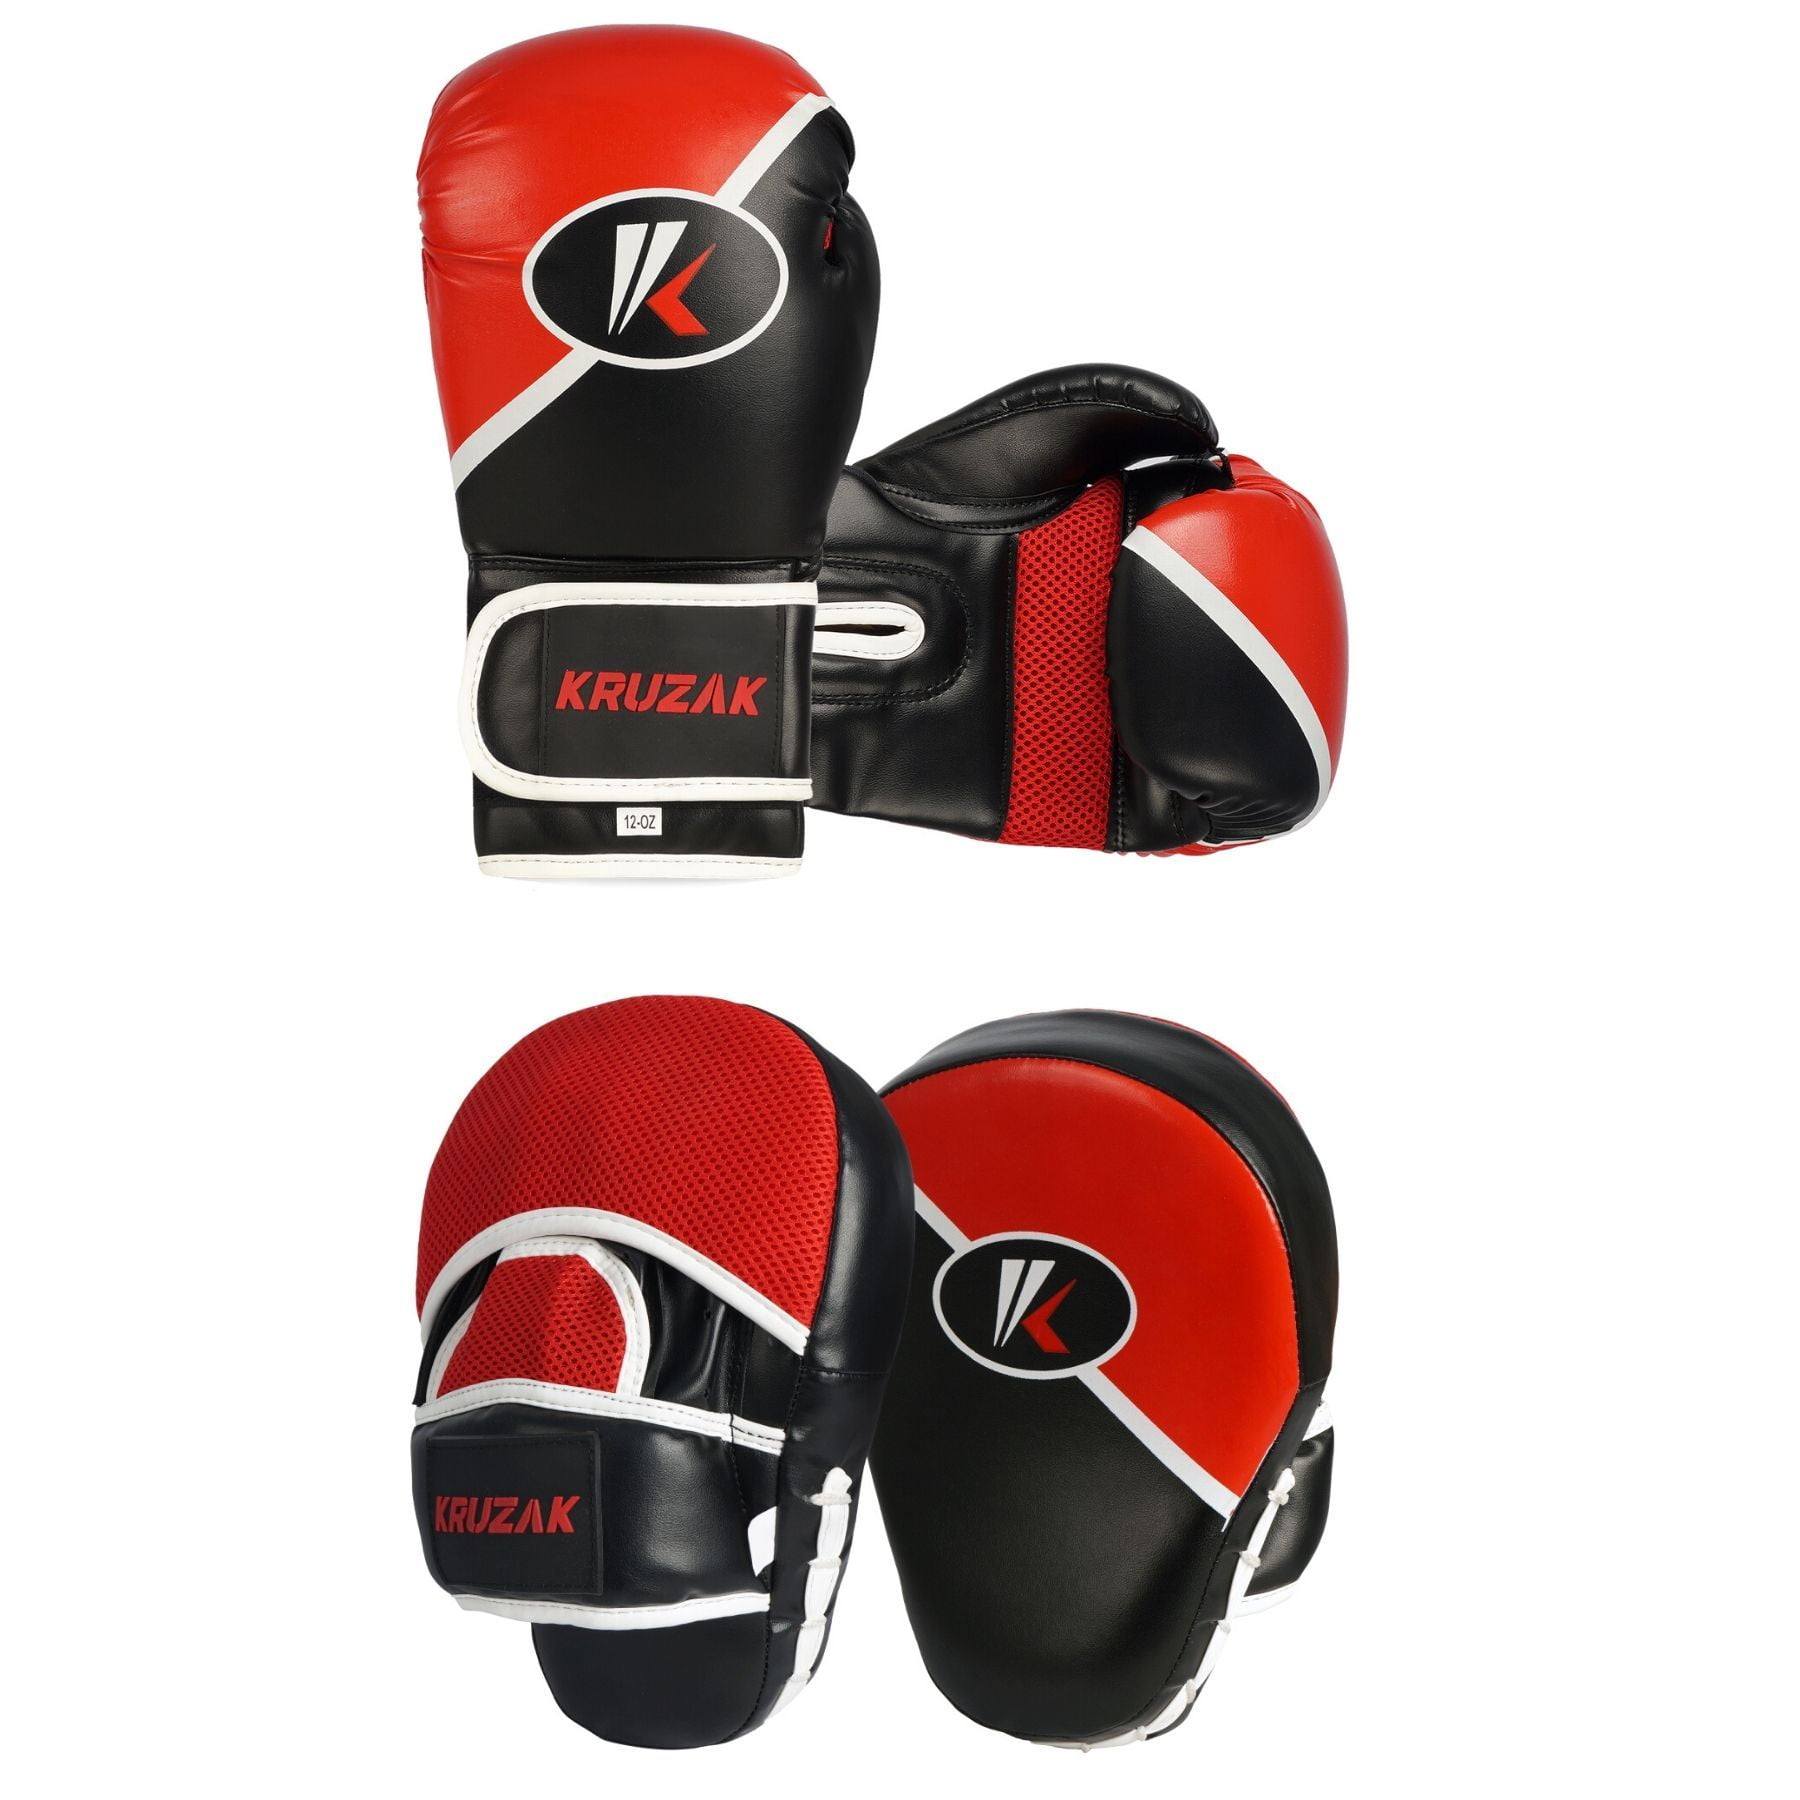 VELO Focus Pads Hook & Jab Mitts Kick Boxing MMA Punching Junior Kids Gloves 